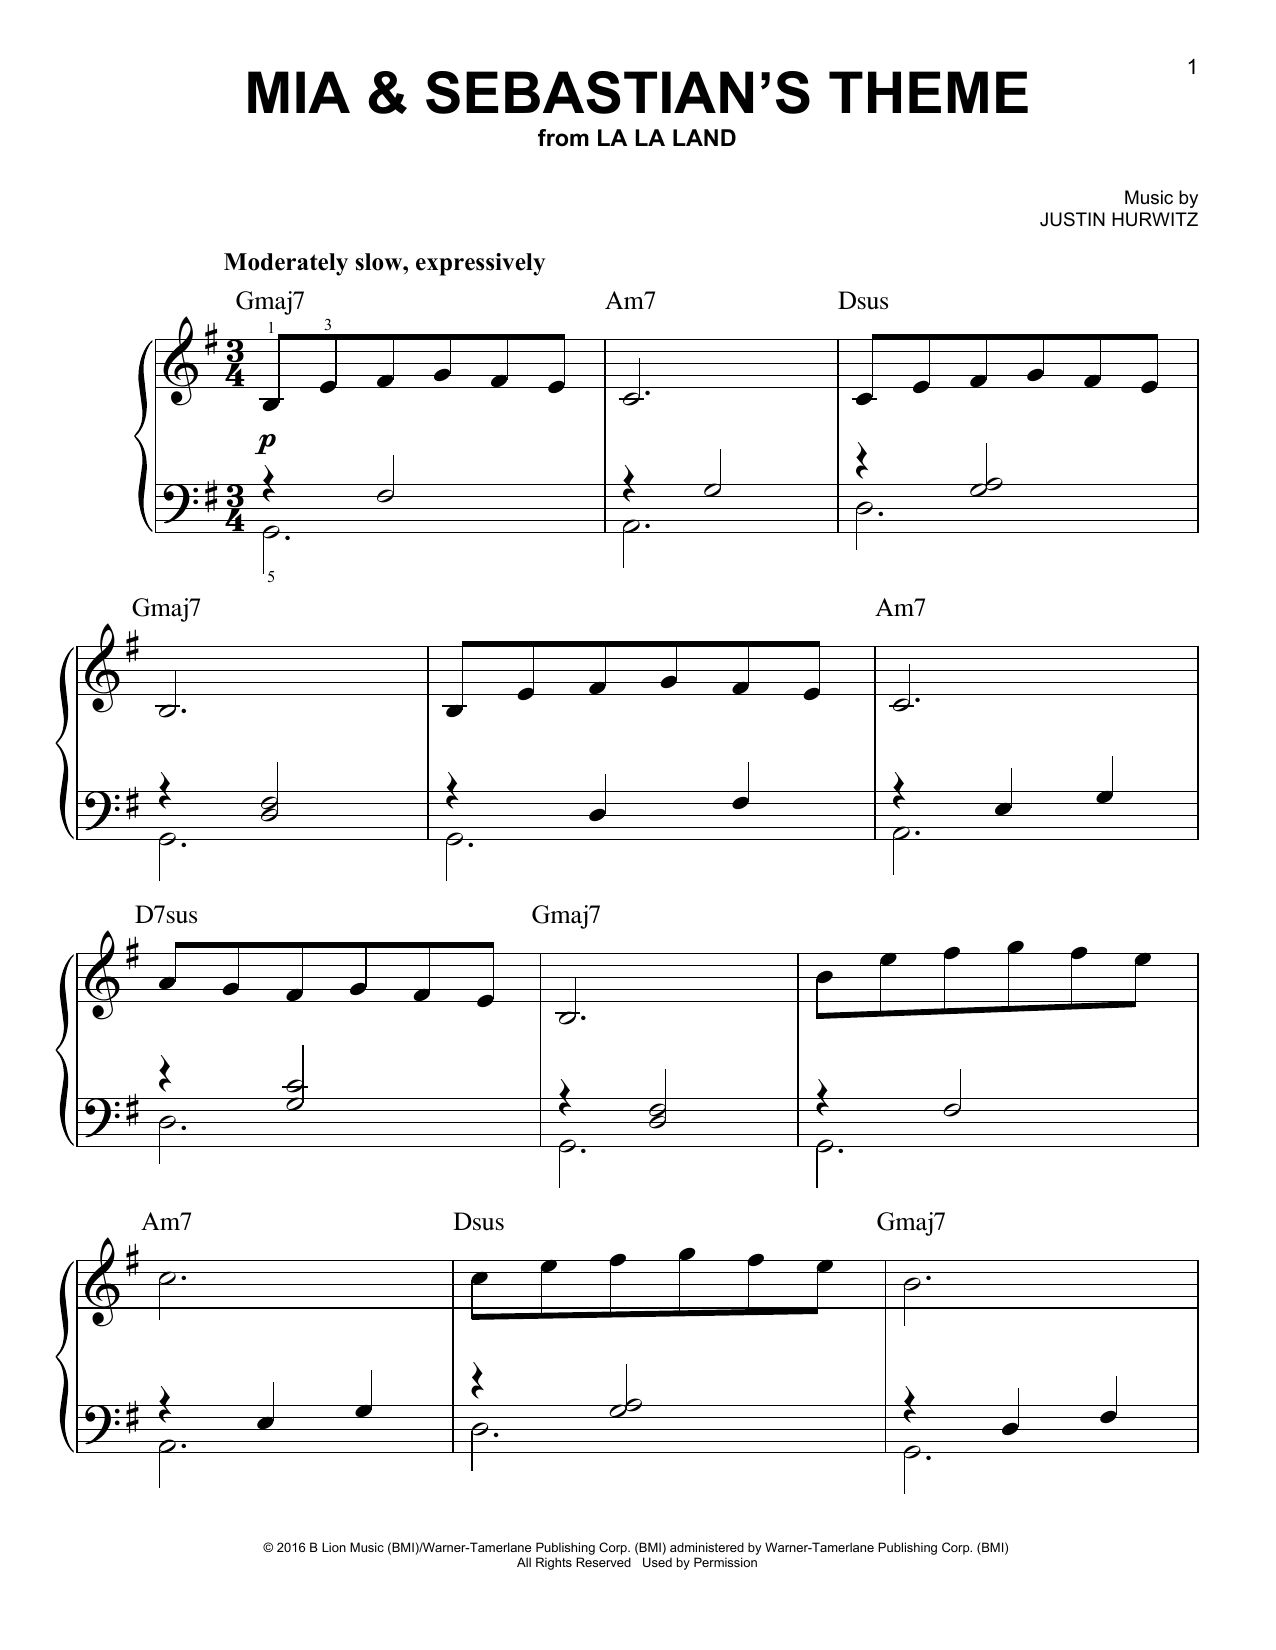 Justin Hurwitz Mia & Sebastian's Theme (from La La Land) Sheet Music Notes & Chords for Easy Piano - Download or Print PDF